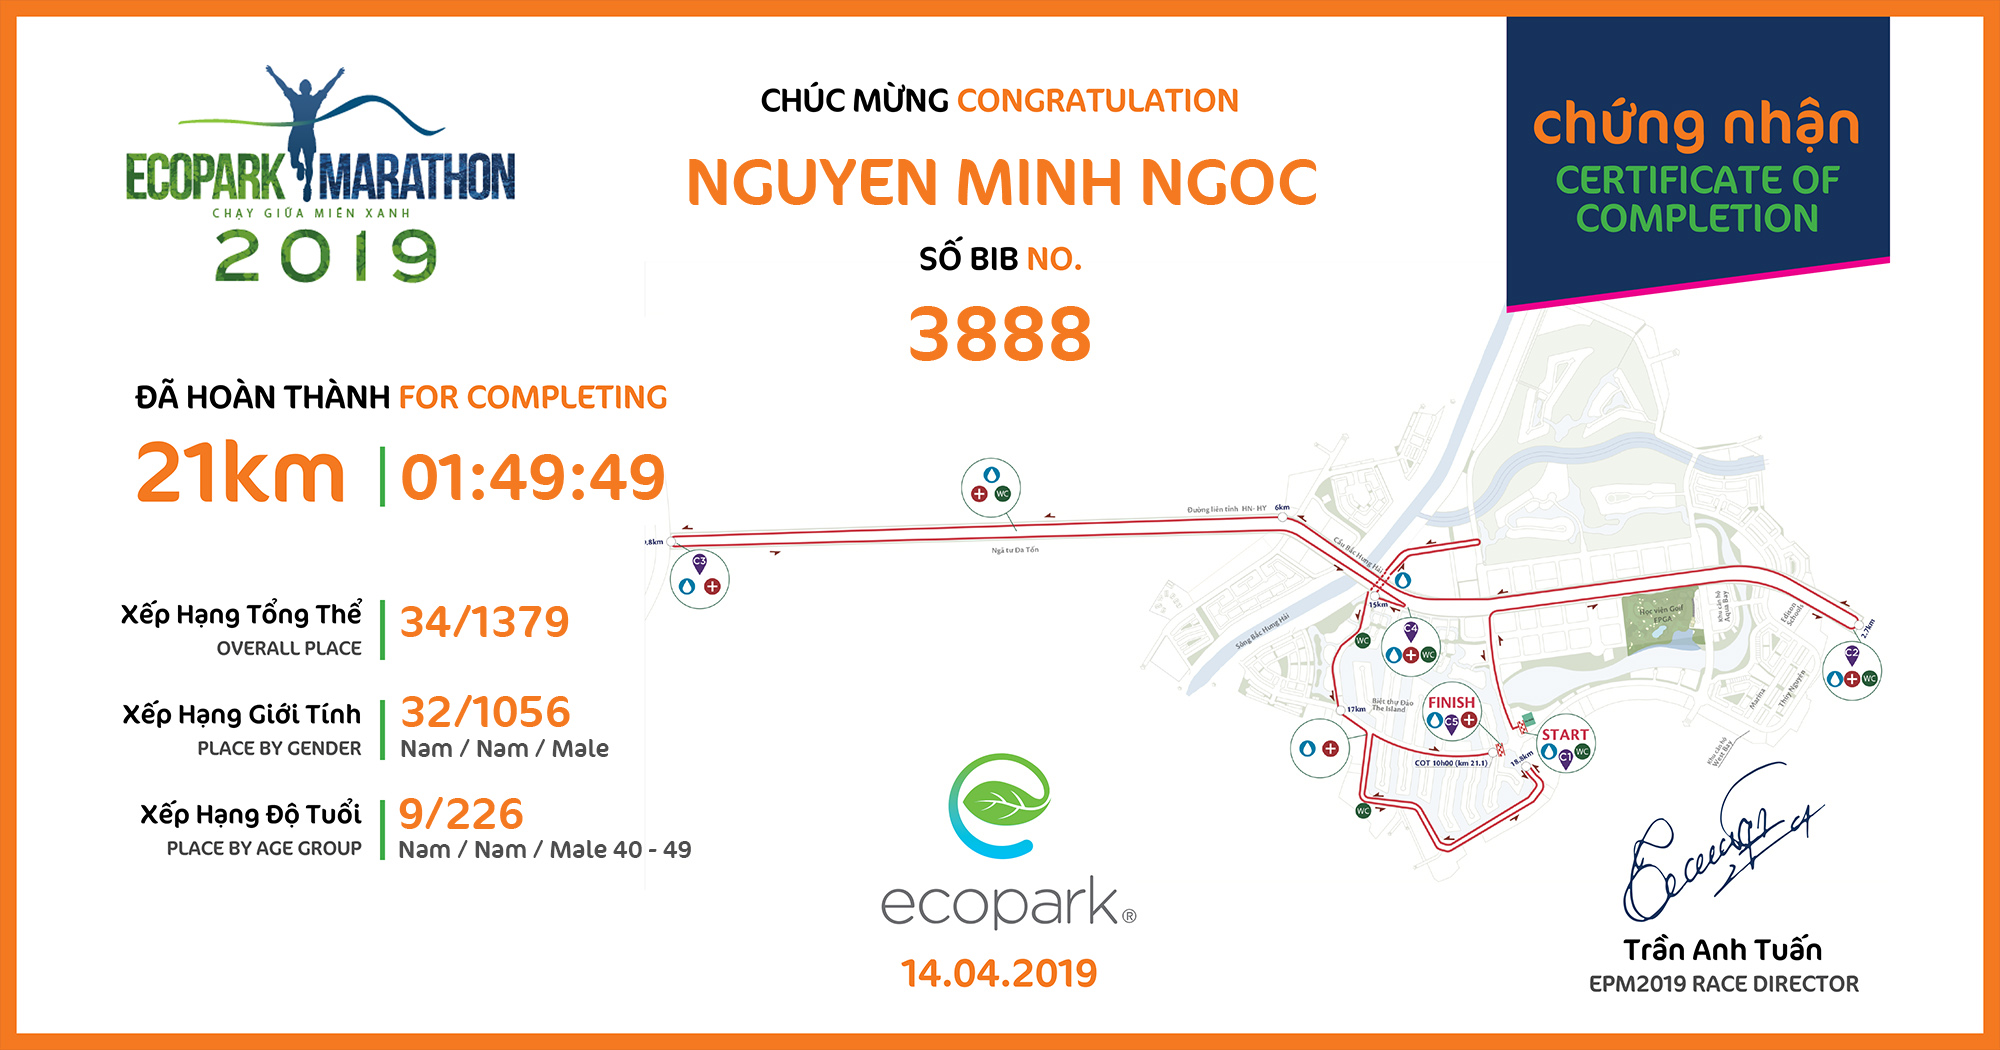 3888 - Nguyen Minh Ngoc